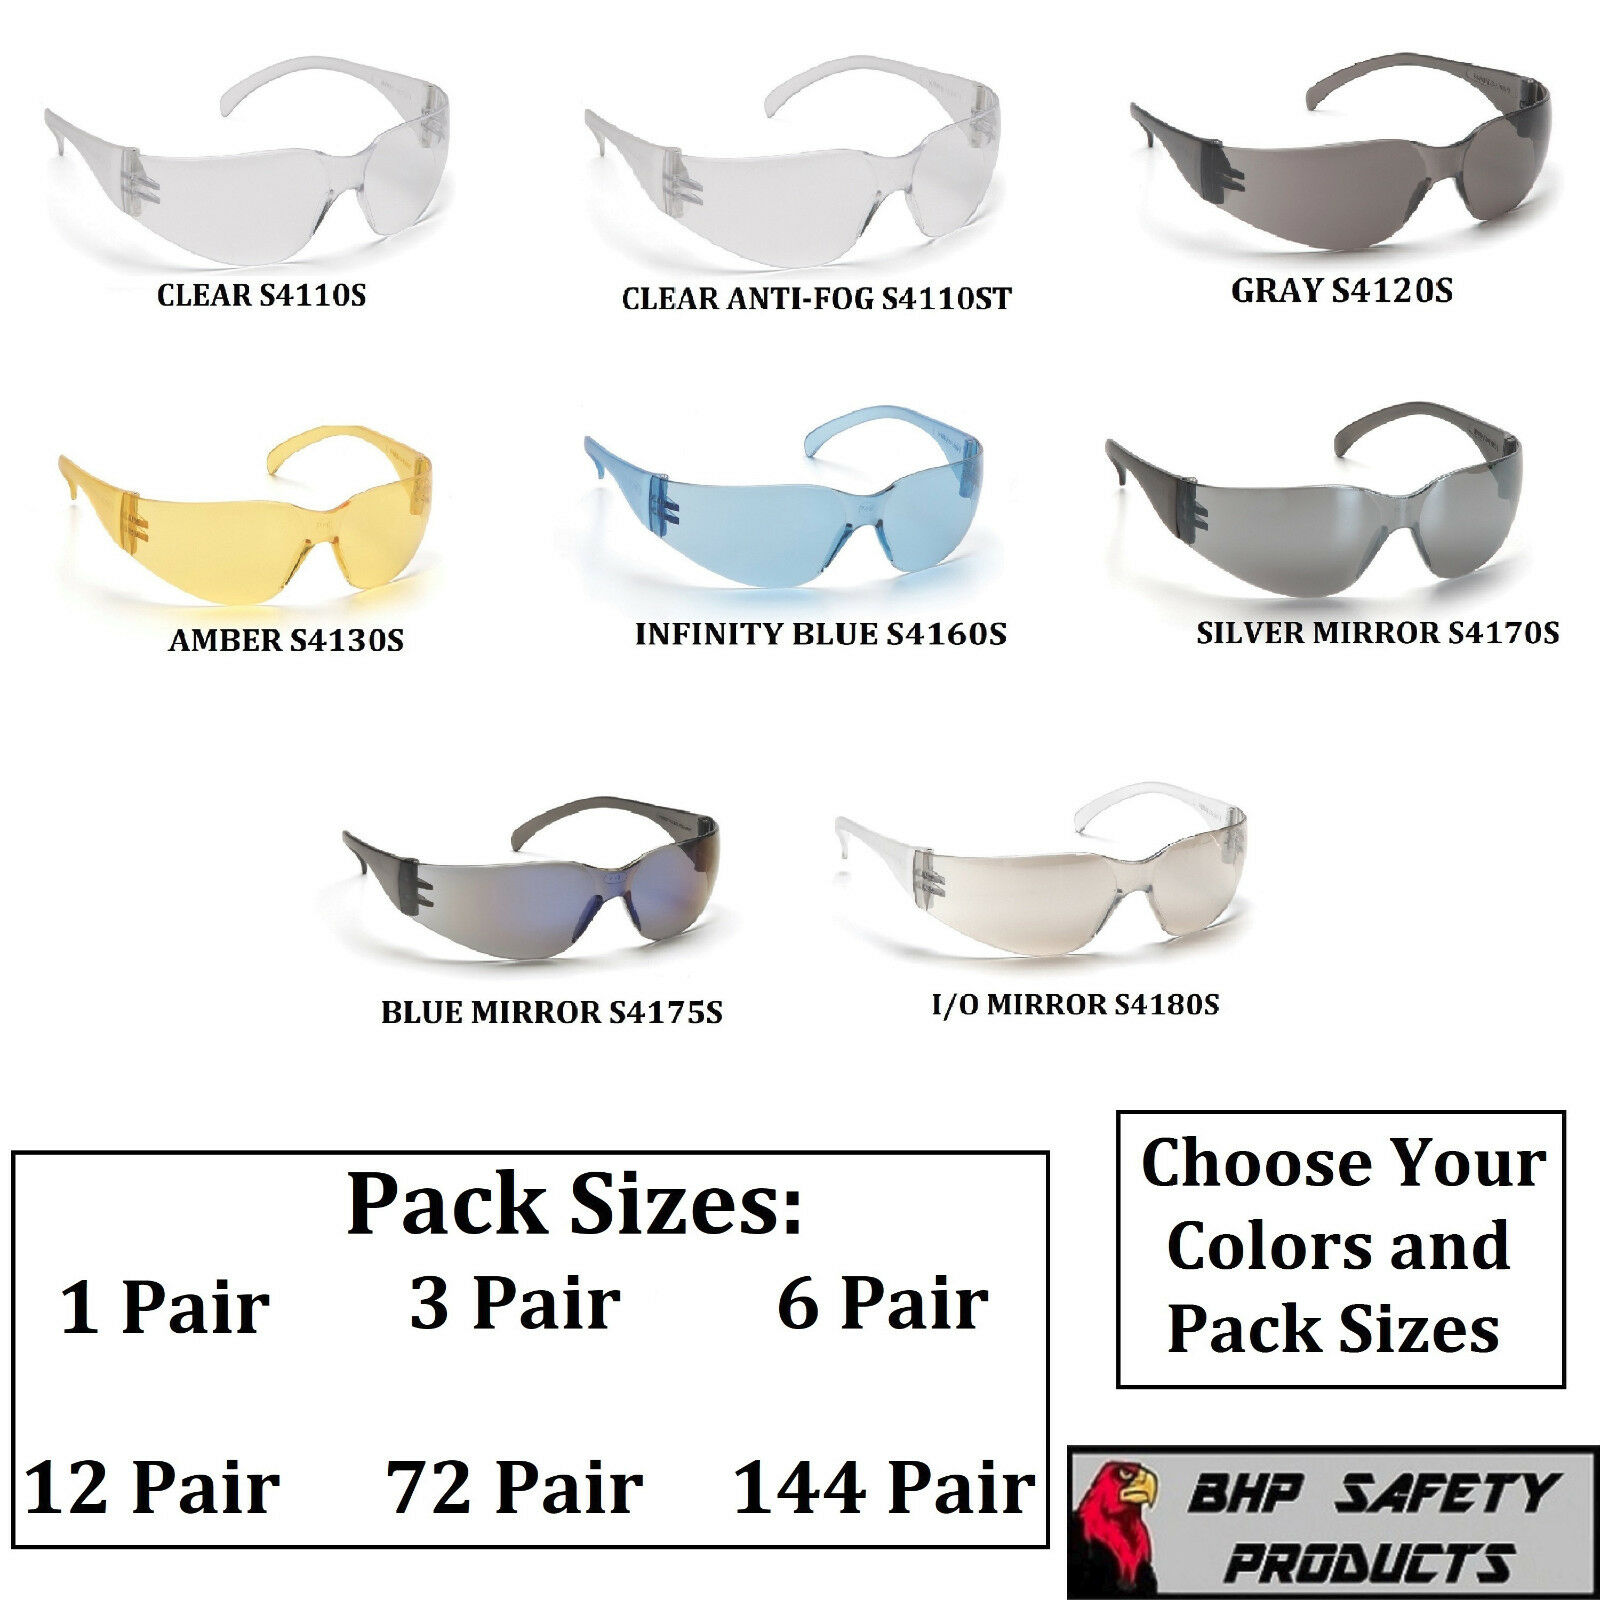 Pyramex Intruder Safety Glasses Ansi Z87+ Work Eyewear - Lightweight, Sunglasses